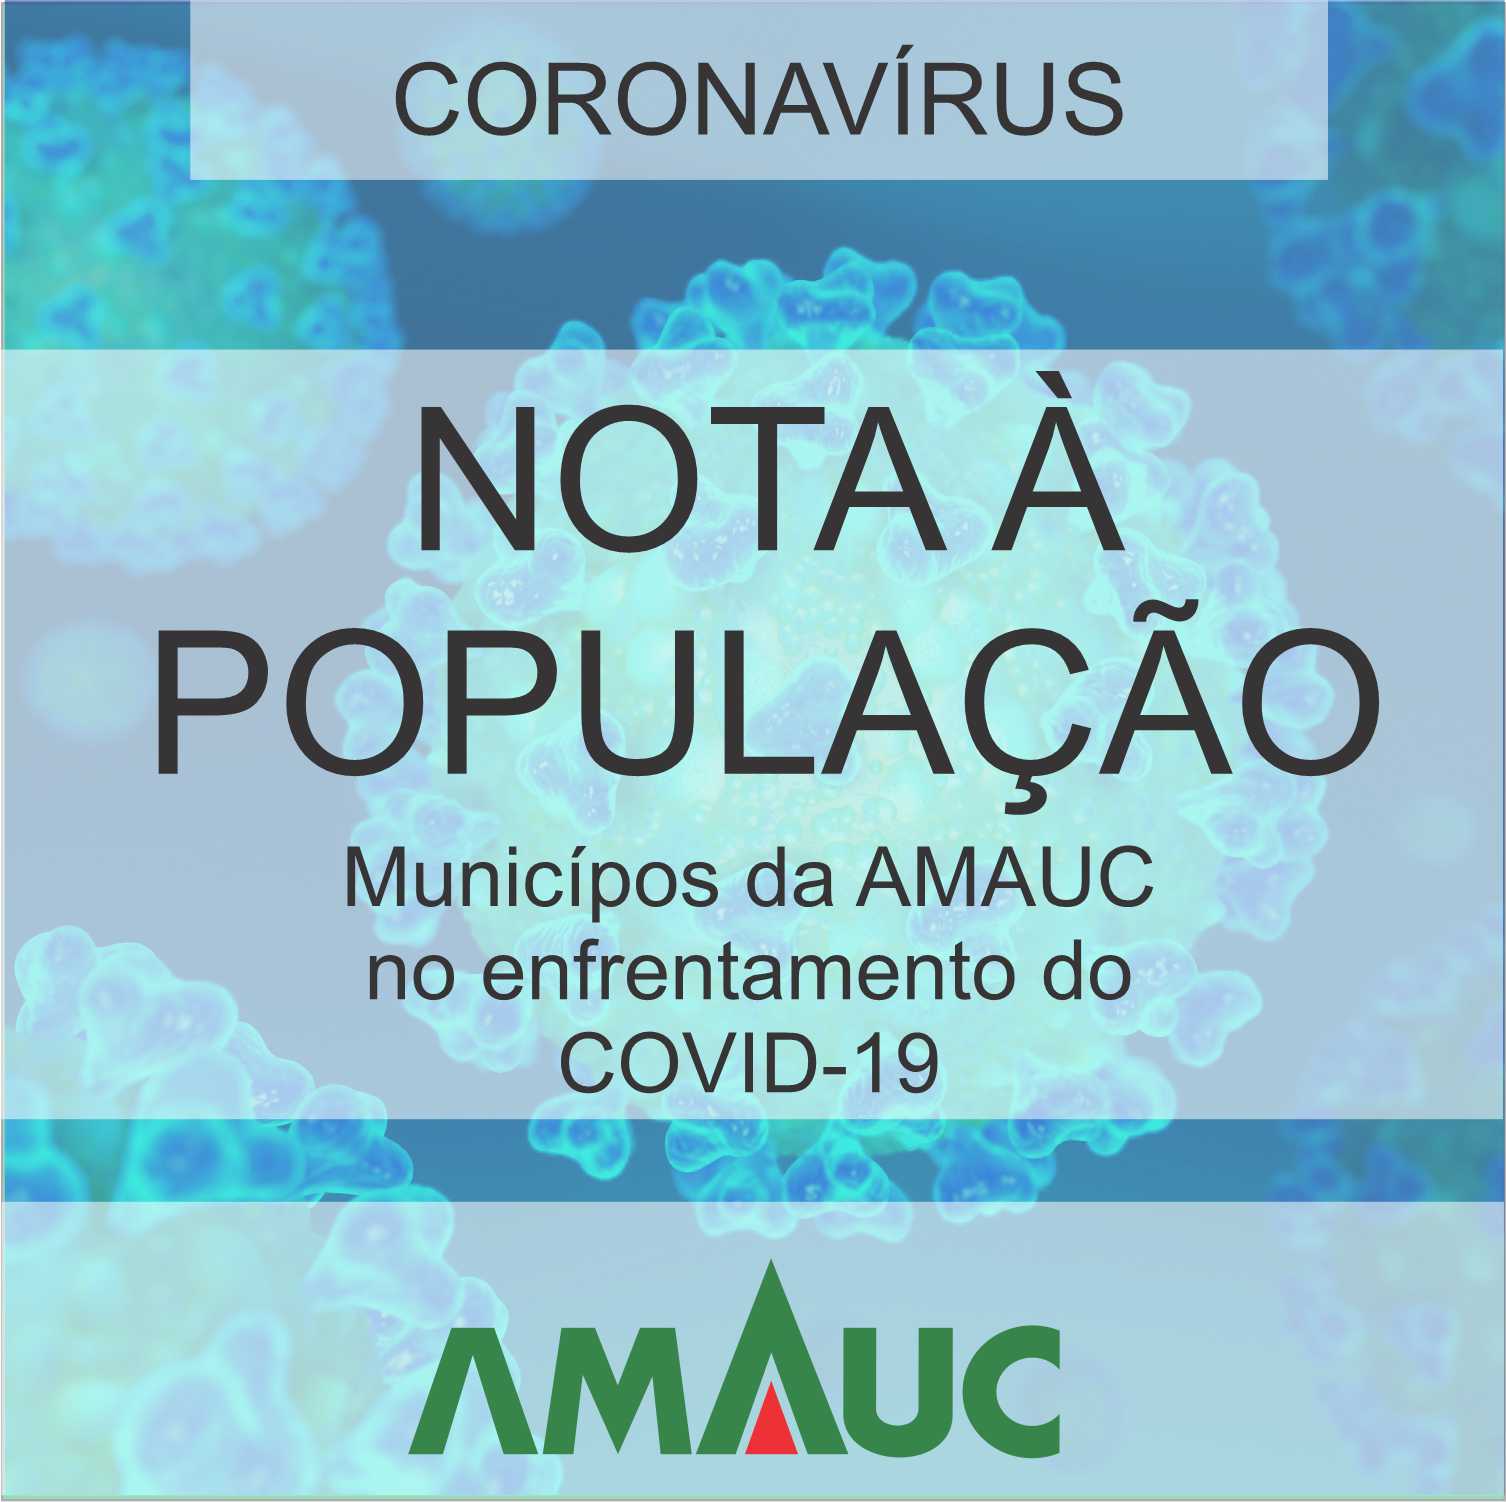 Read more about the article Municípios da Amauc no enfrentamento do COVID-19